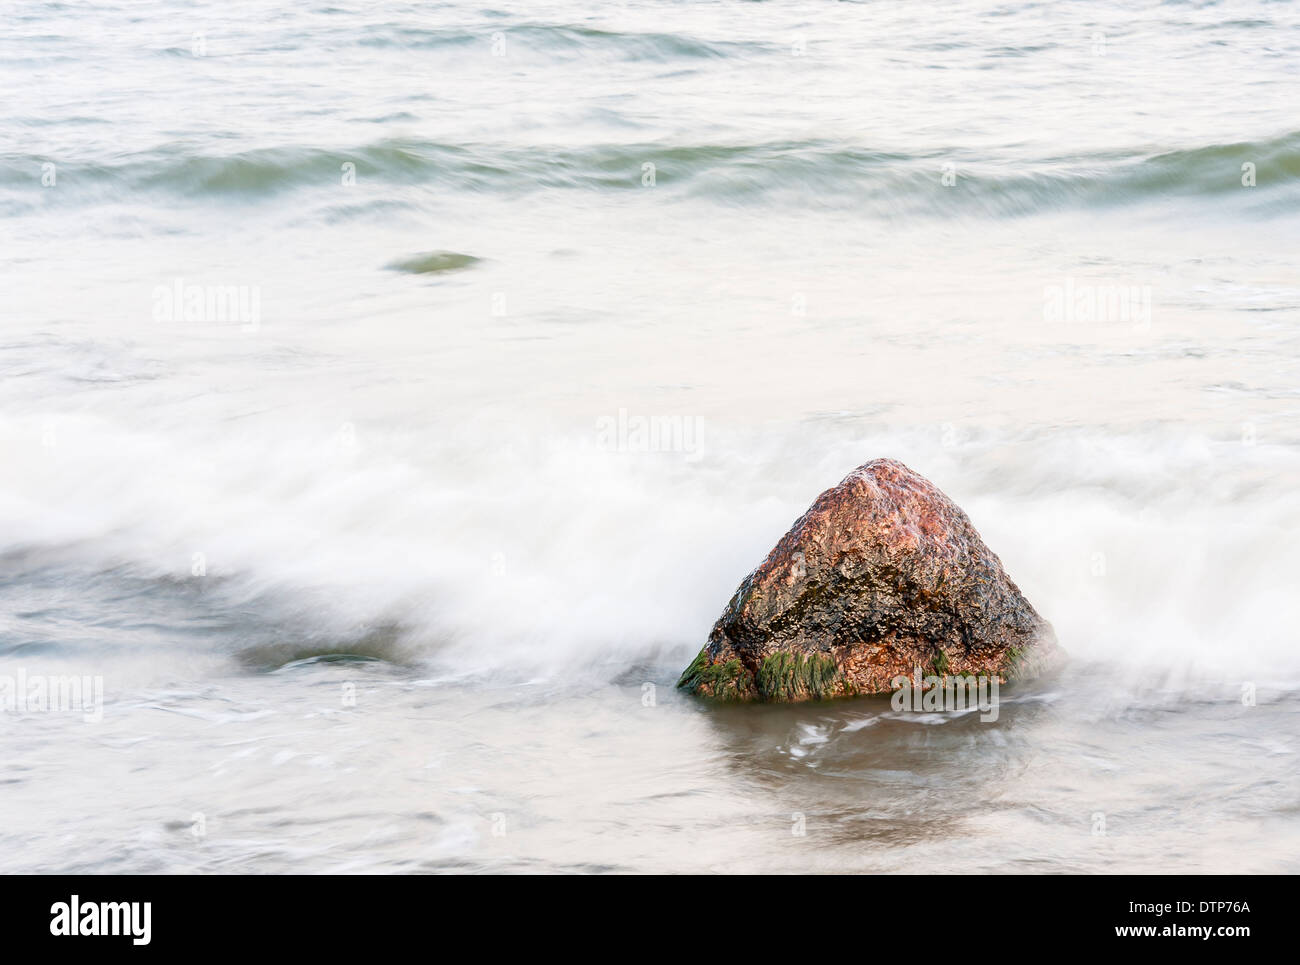 Single stone or rock in a blurry sea Stock Photo